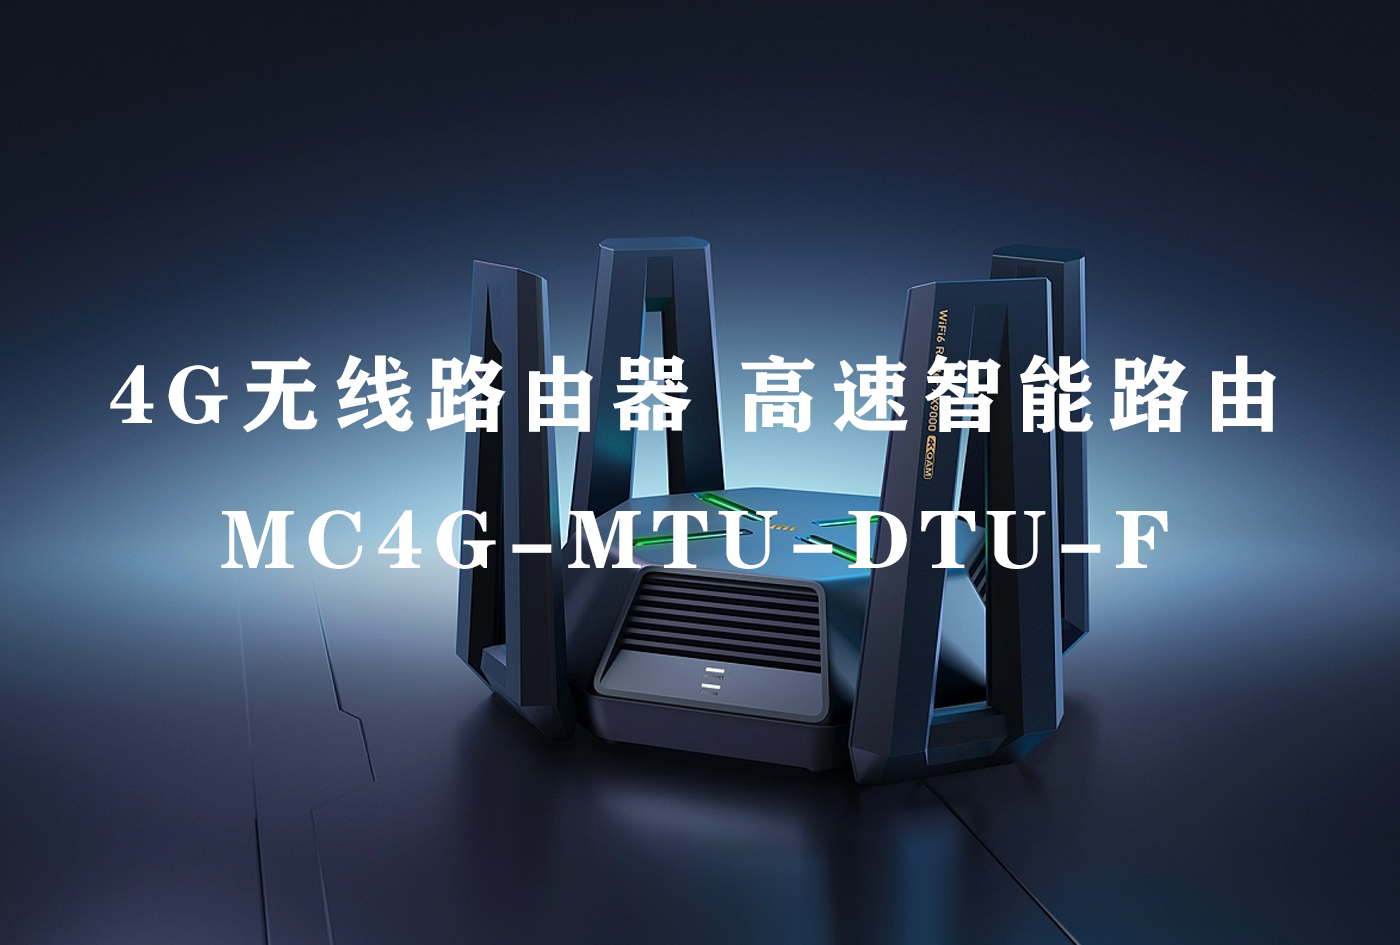 4G无线路由器 高速智能路由 MC4G-MTU-DTU-F